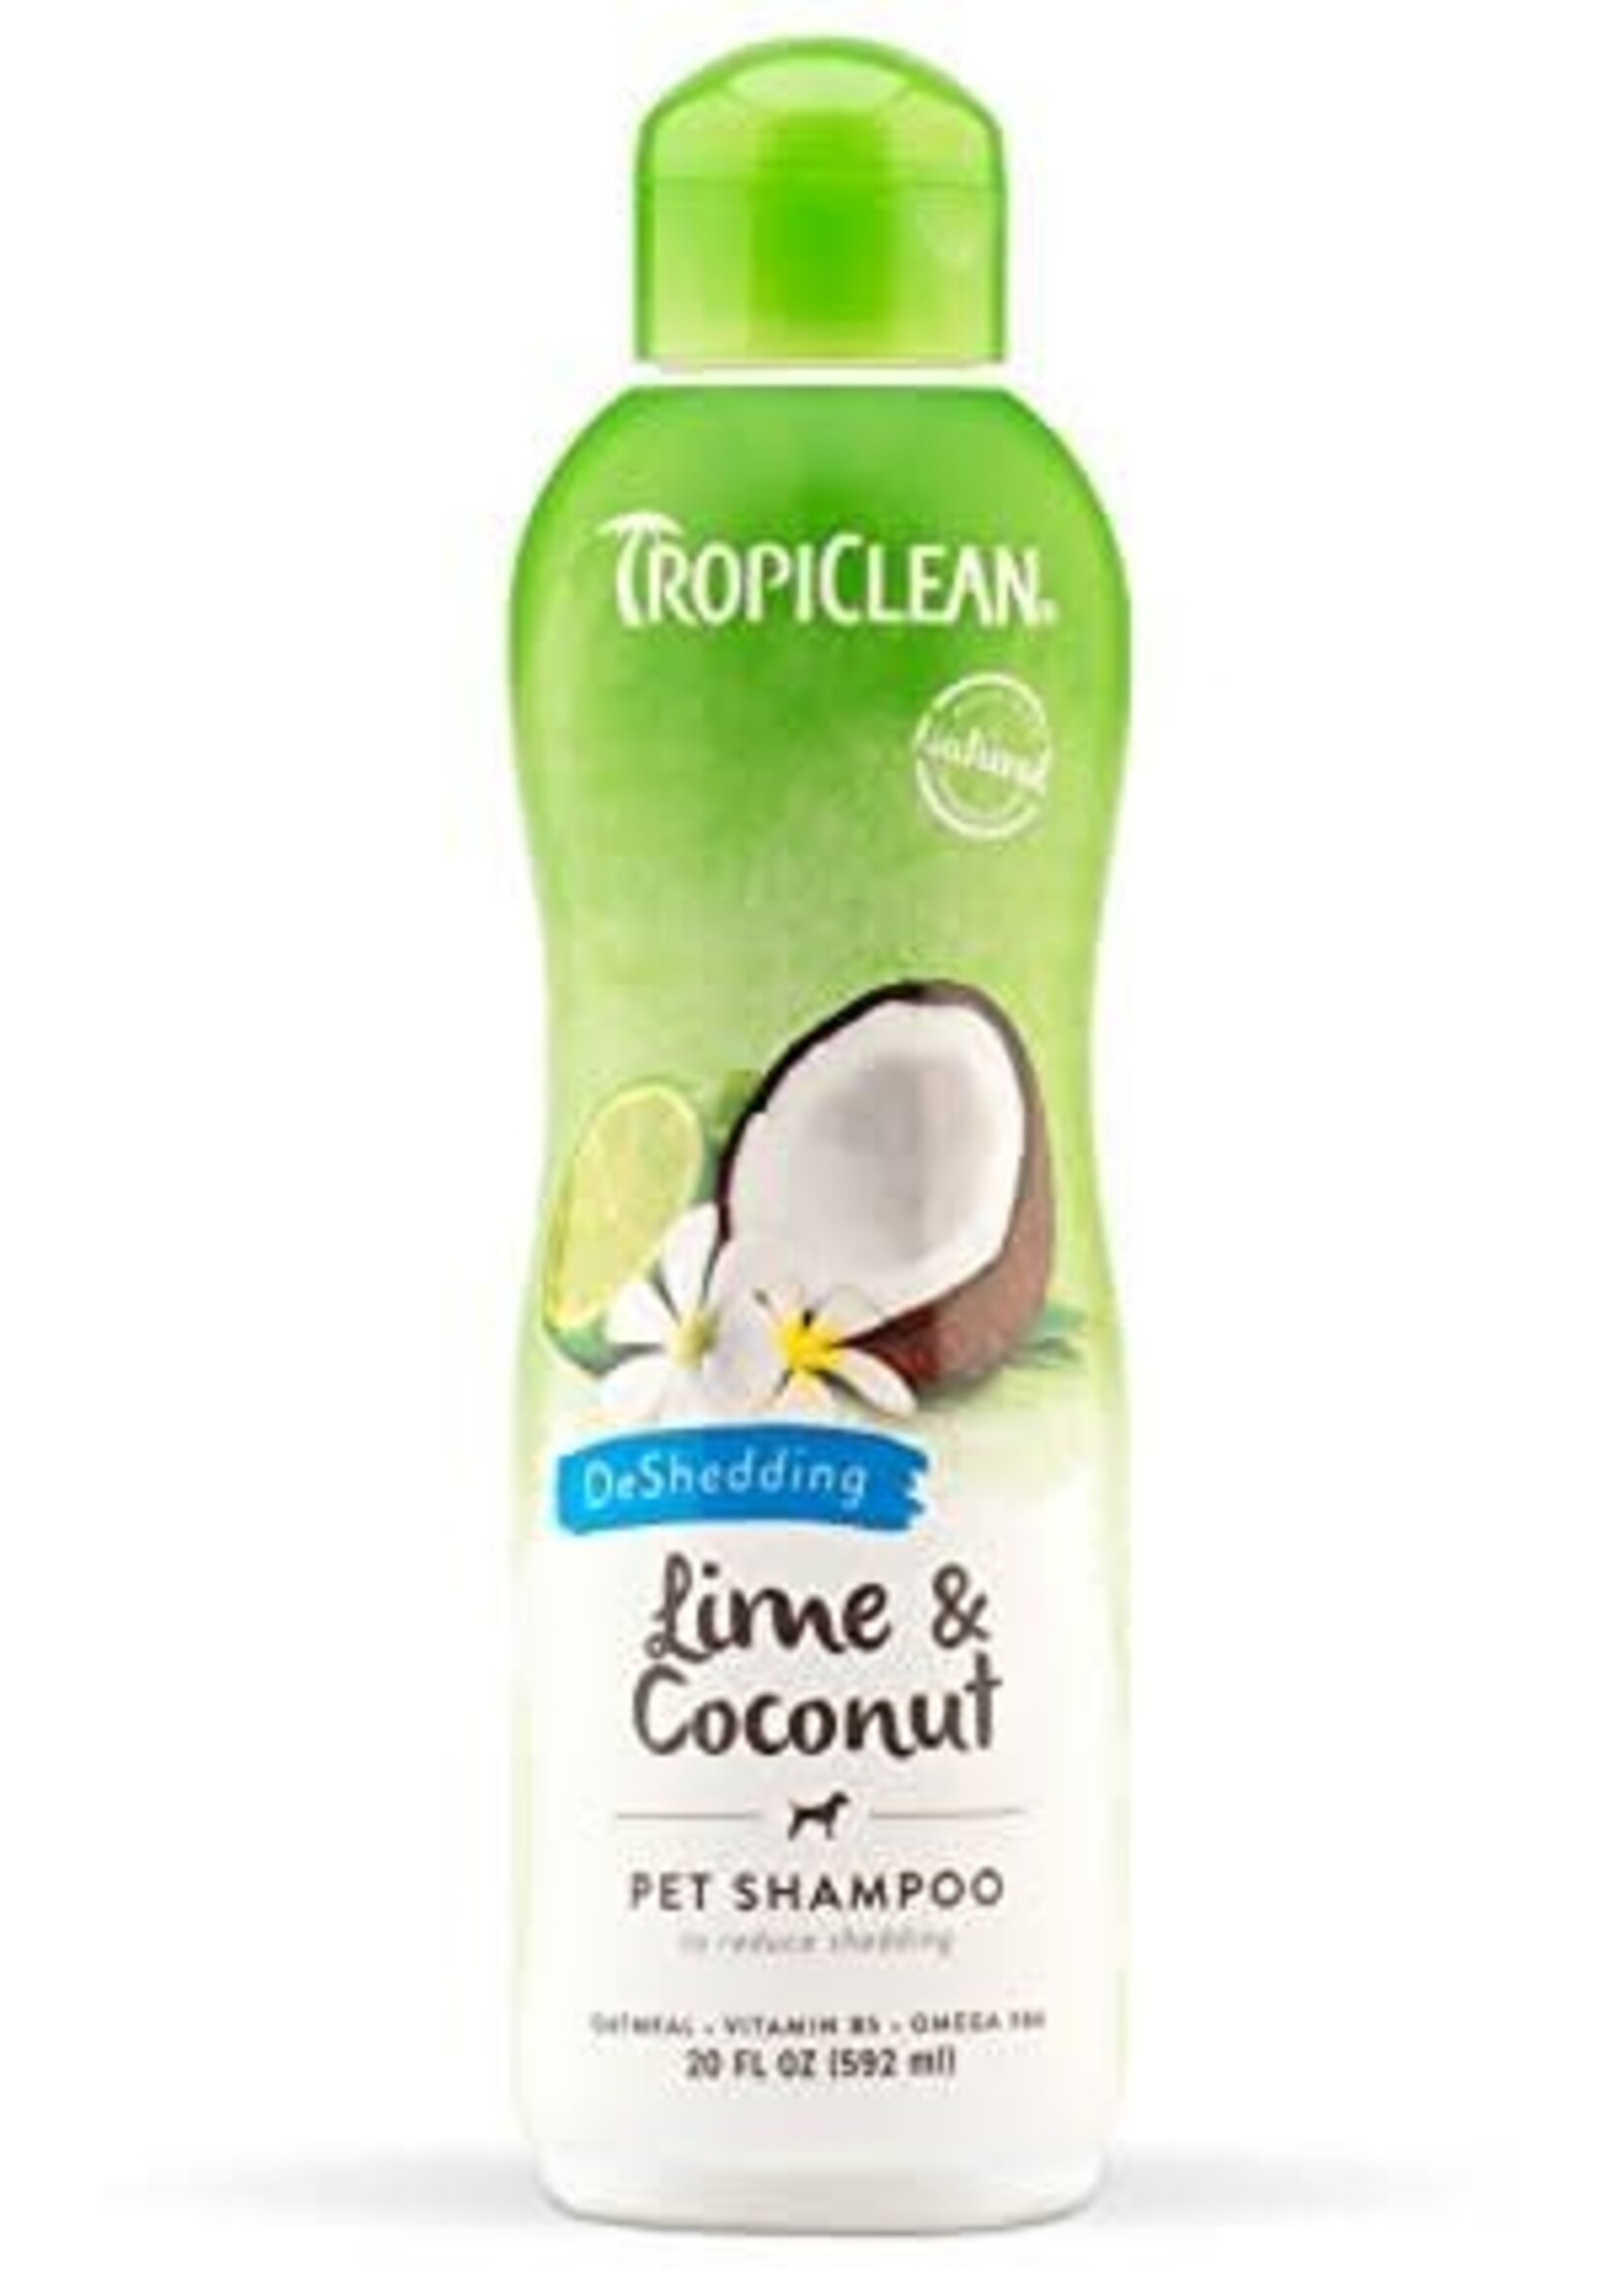 Tropiclean Lime and Coconut Deshedding Shampoo 20oz